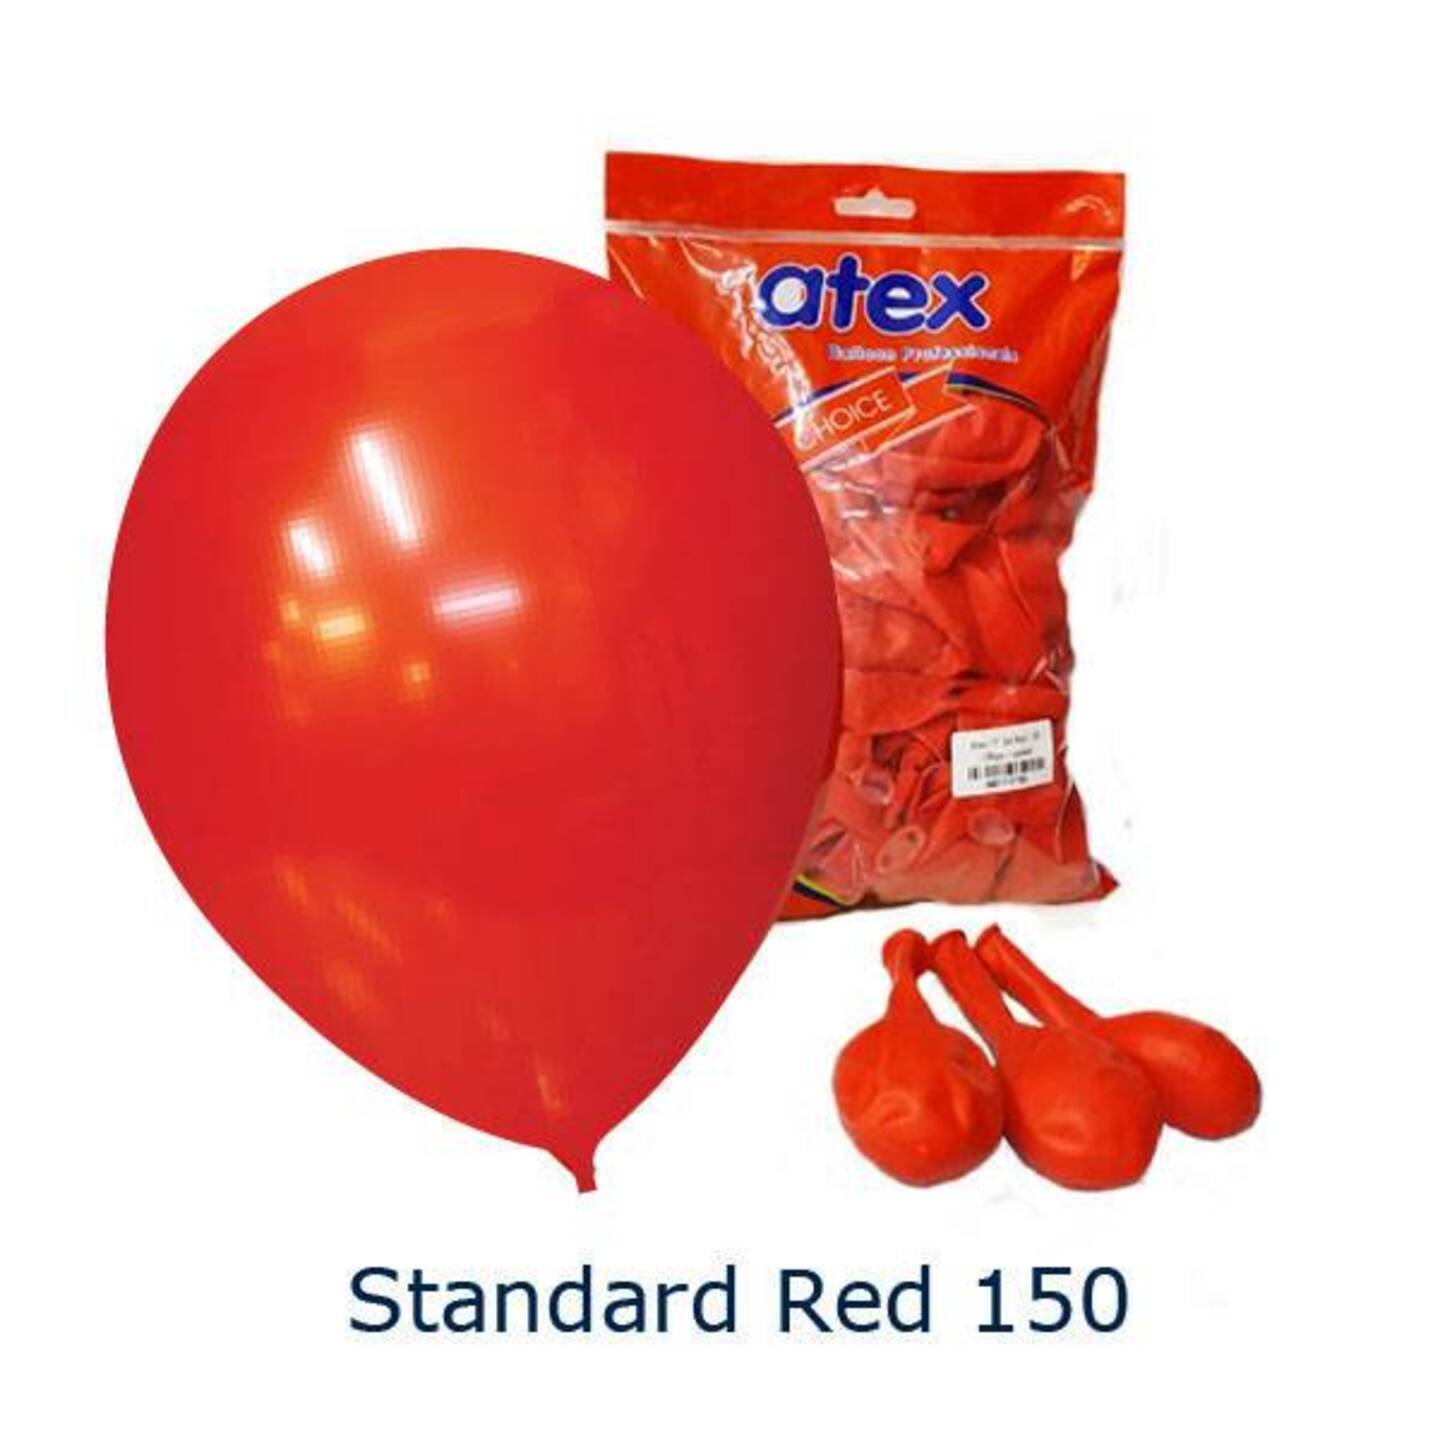 Standard Red 150